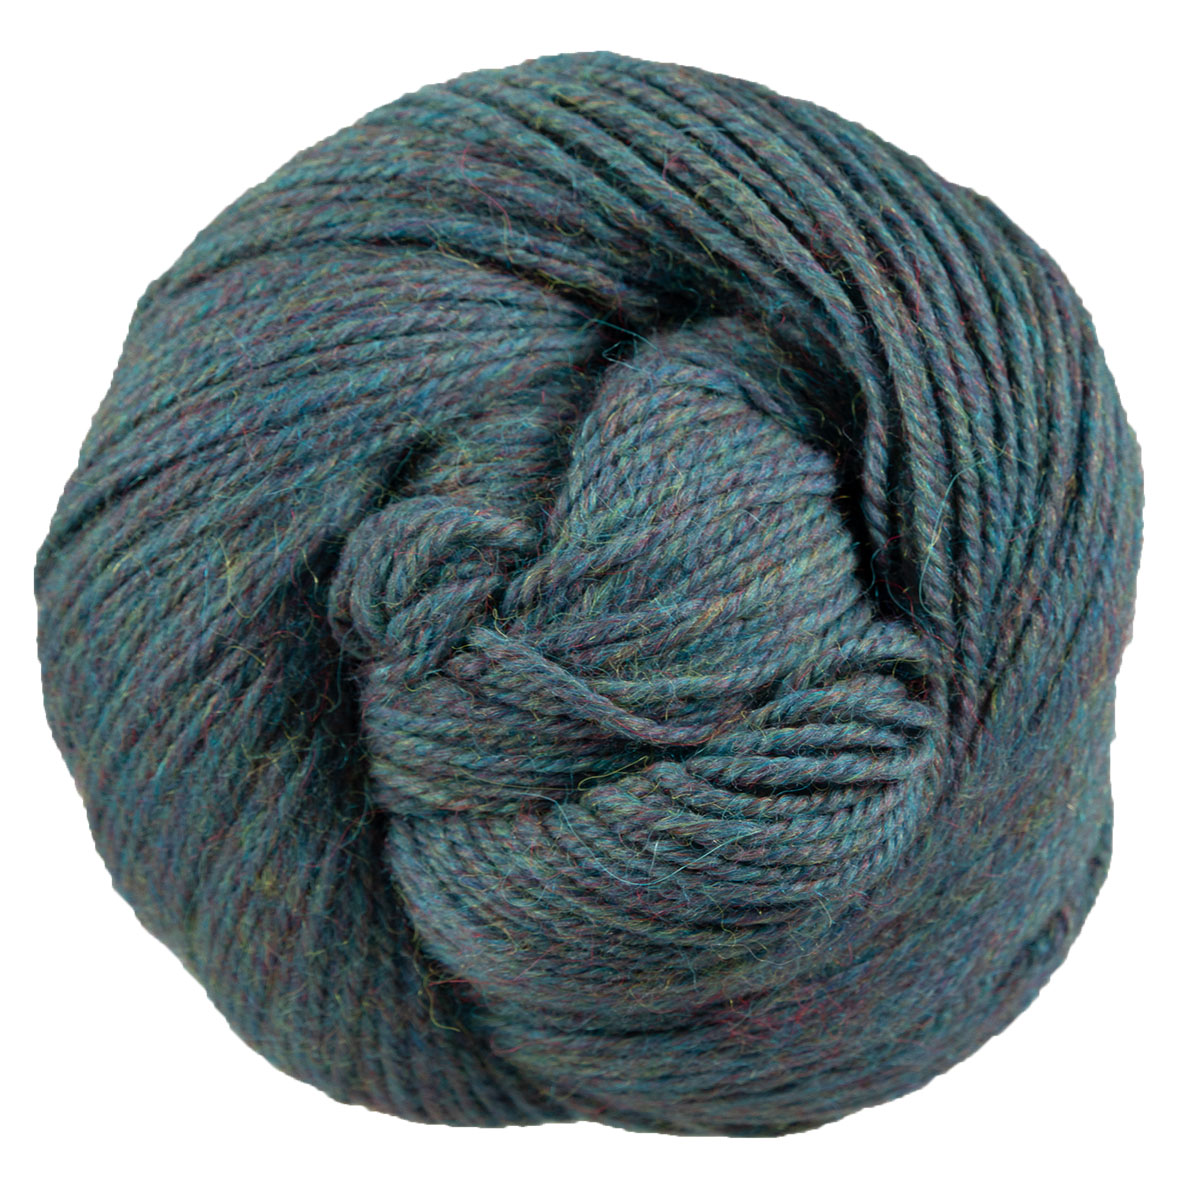 Yarn: Variegated dark green alpaca DK yarn